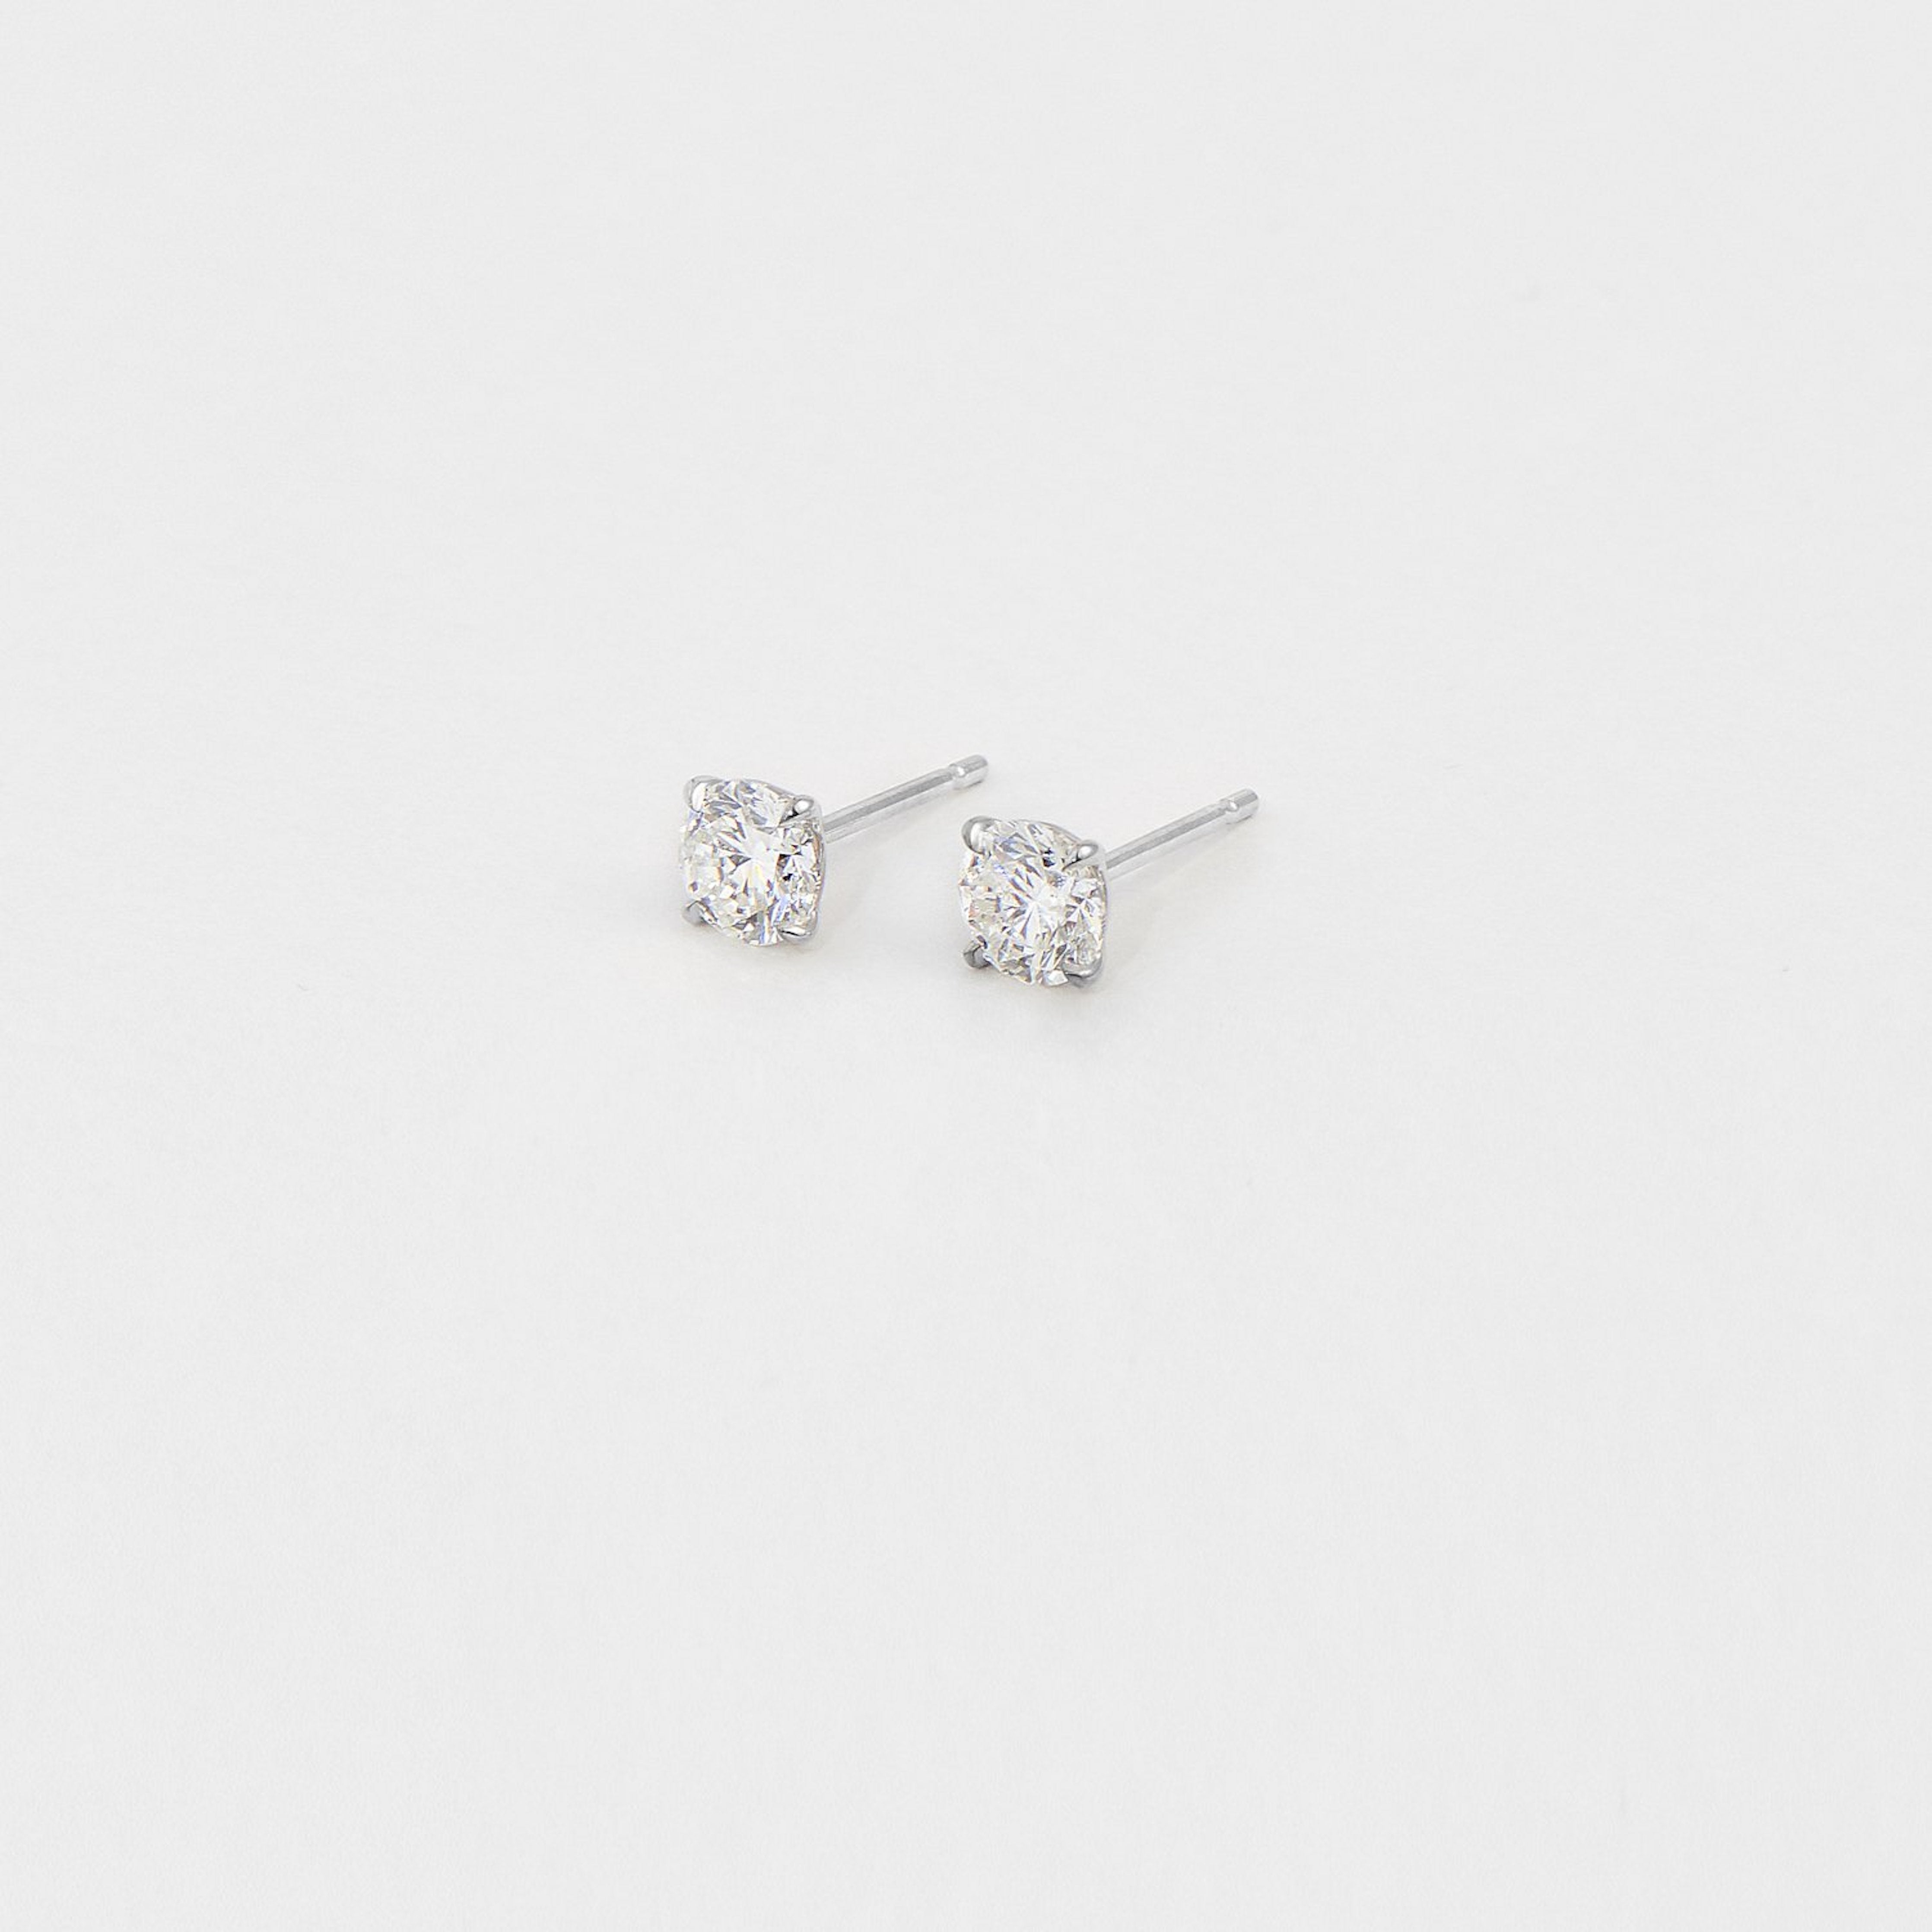 Mini Diamond Studs - The Clear Cut Collection